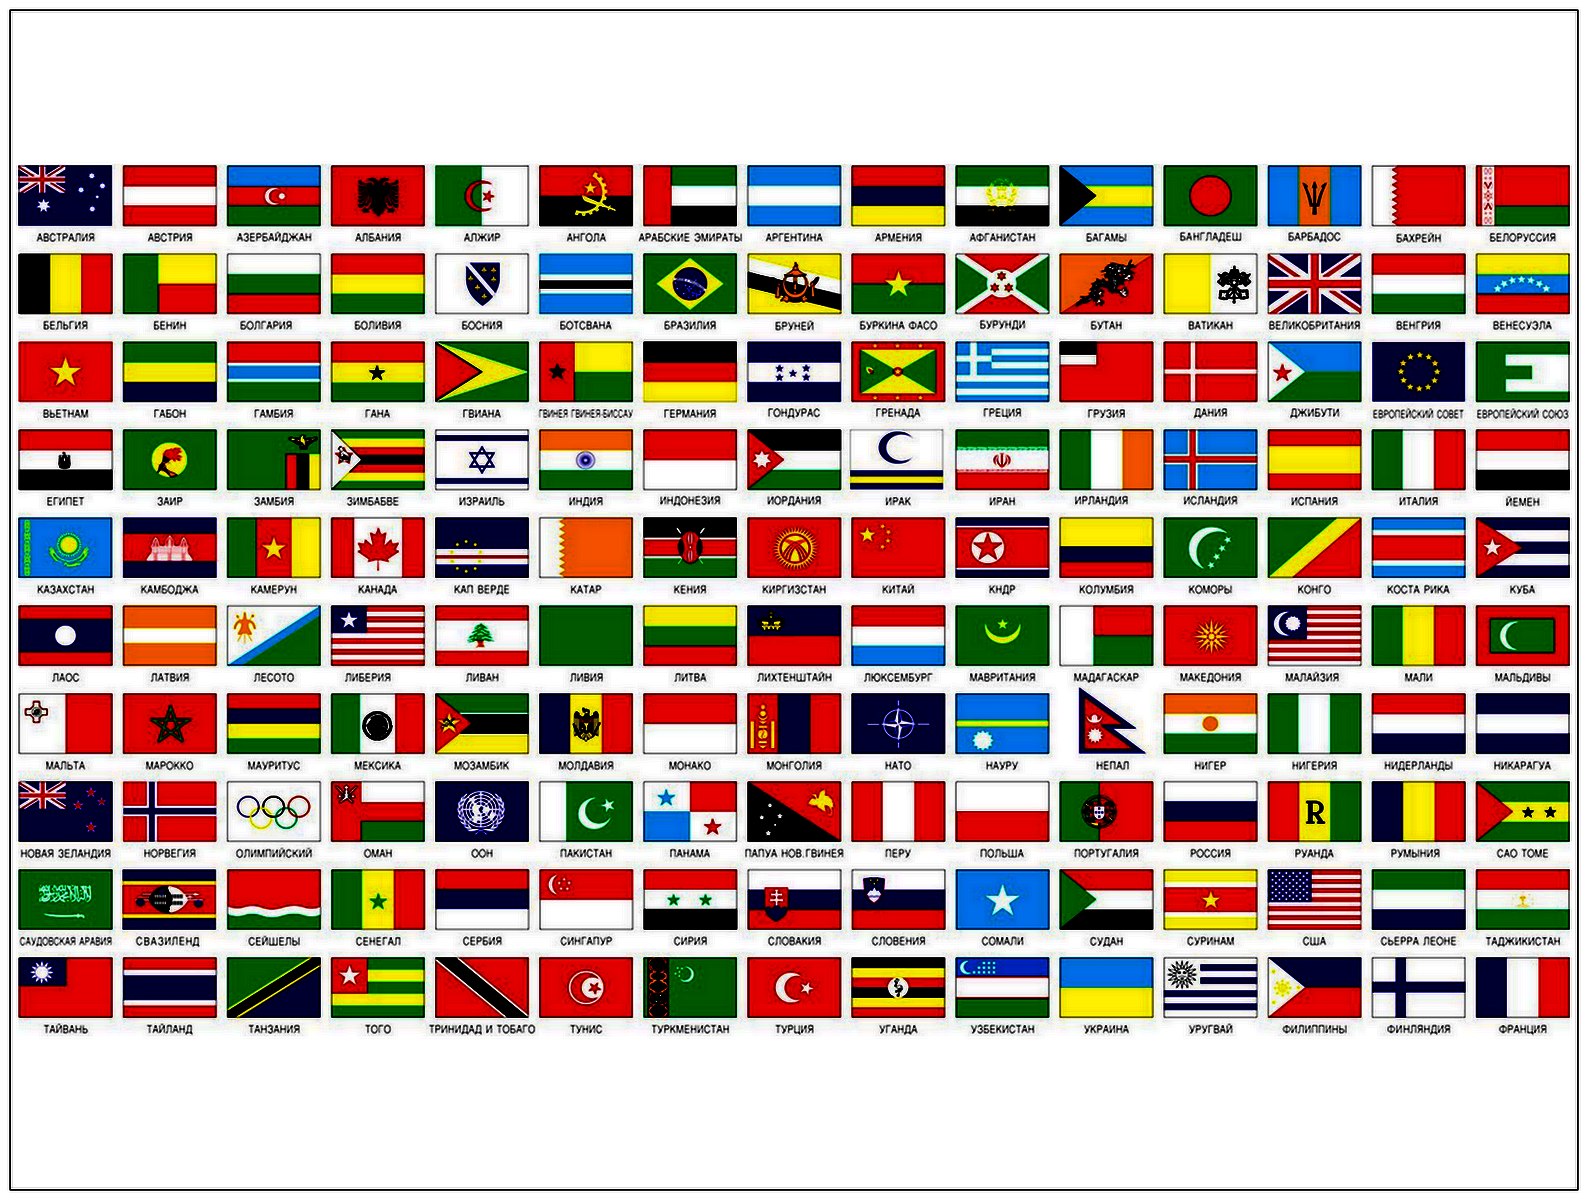 Как выглядит флаг картинка. Флаги государств Евразии. Флаги стран с названиями стран на русском.